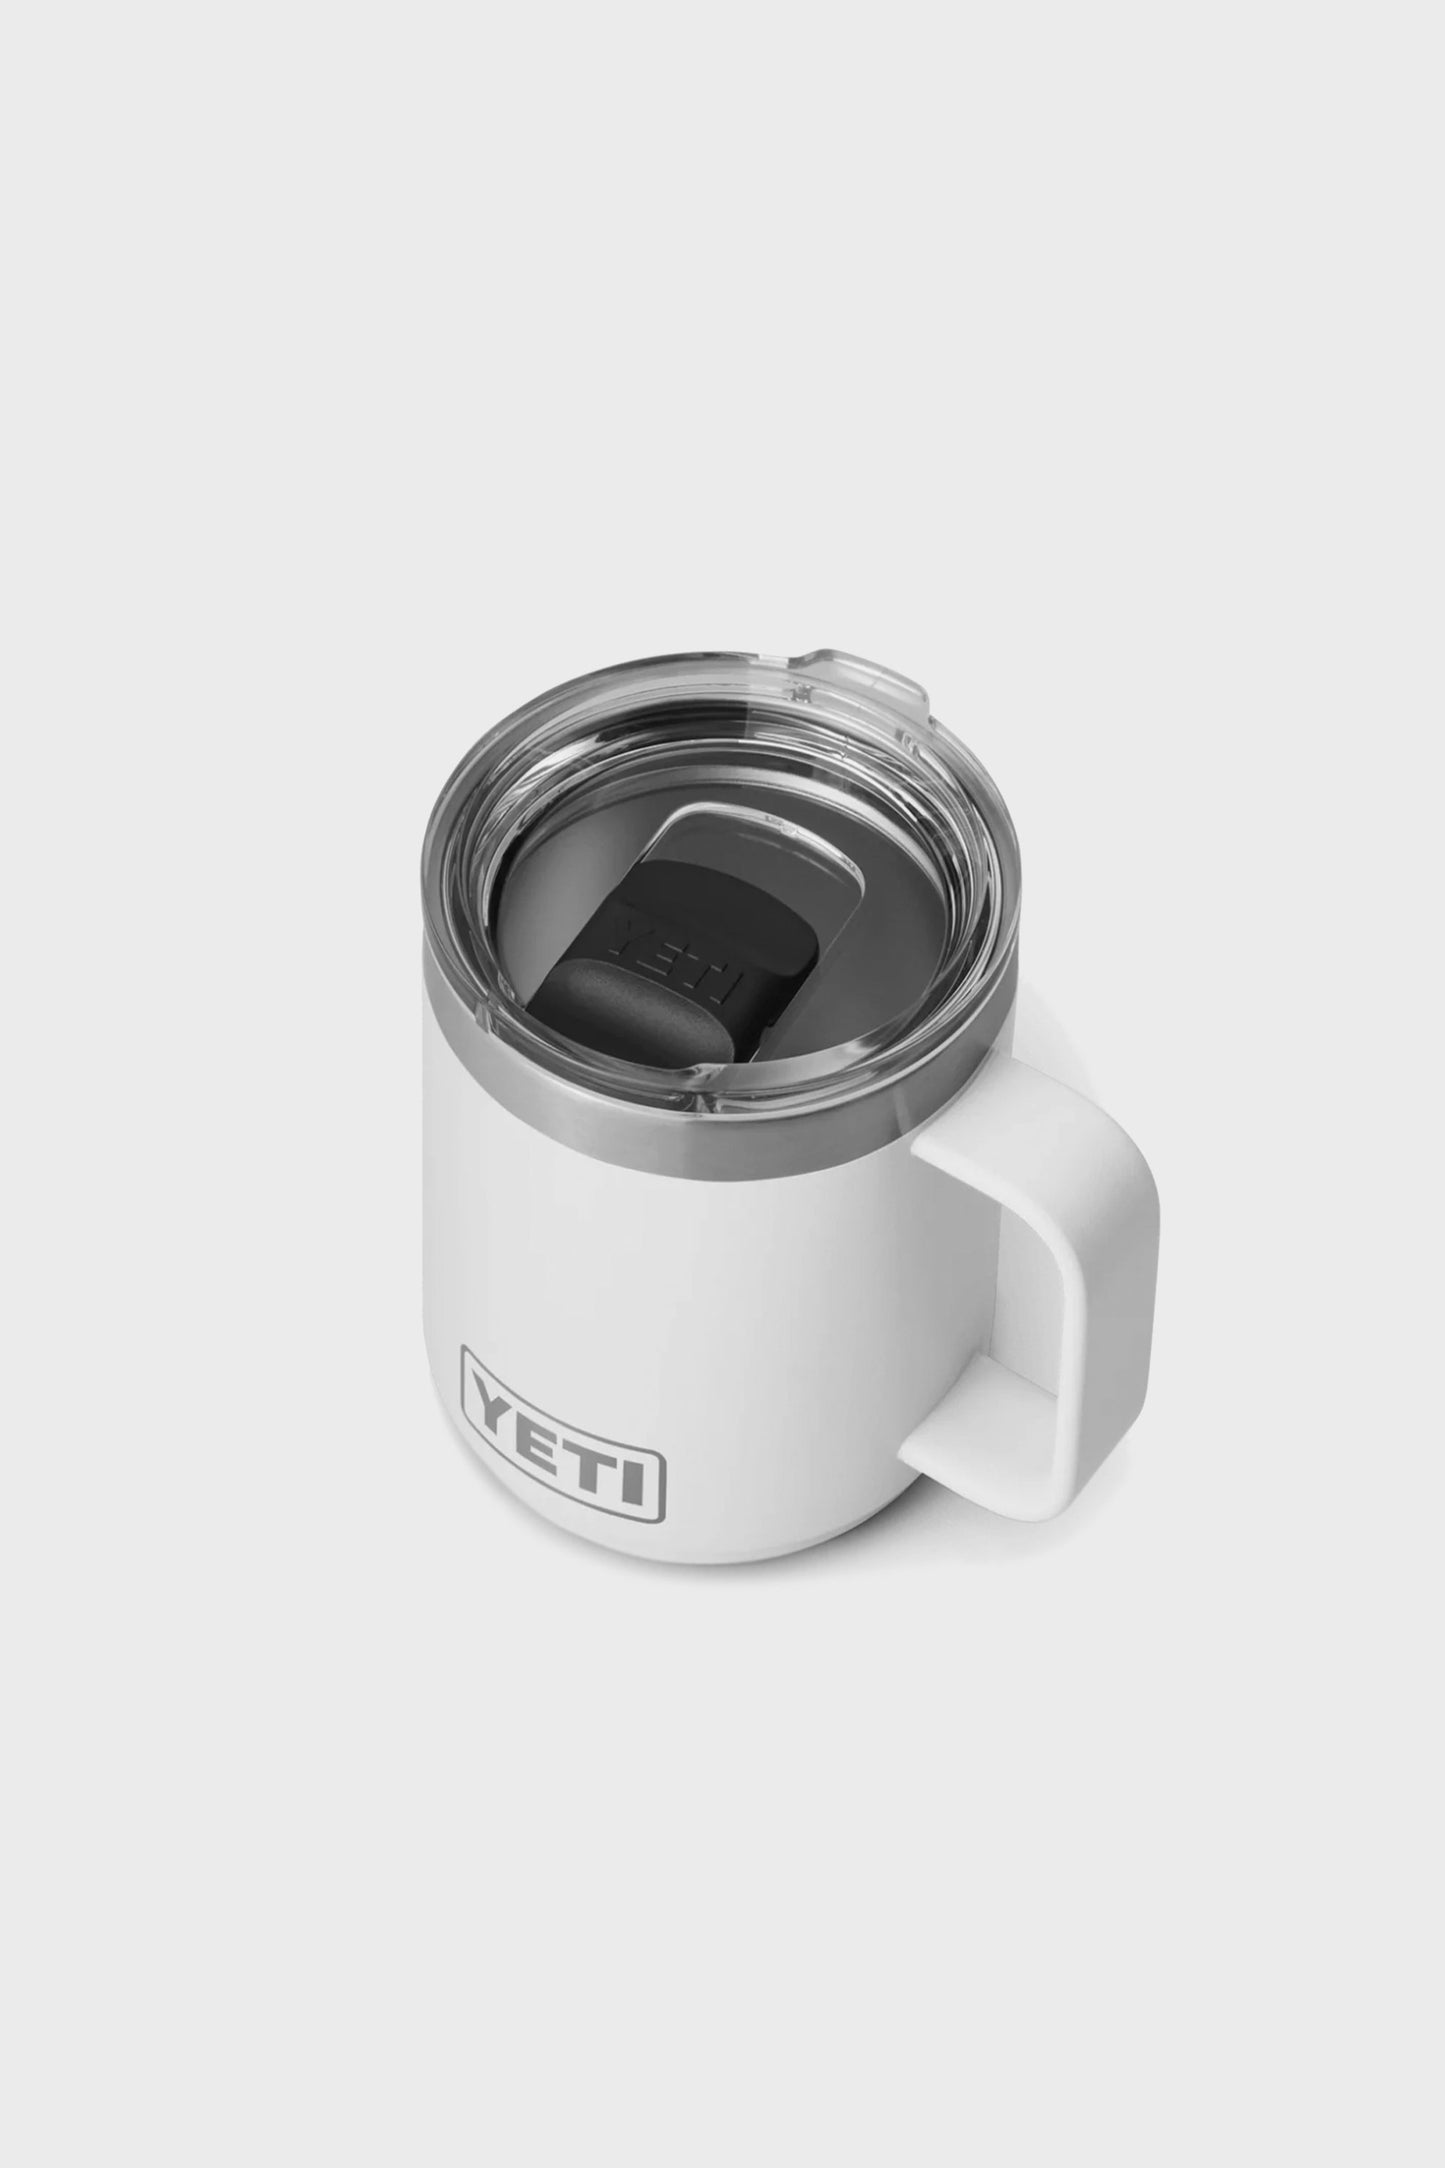 White YETI Rambler 10 oz Stackable Mug With Magslider Lid